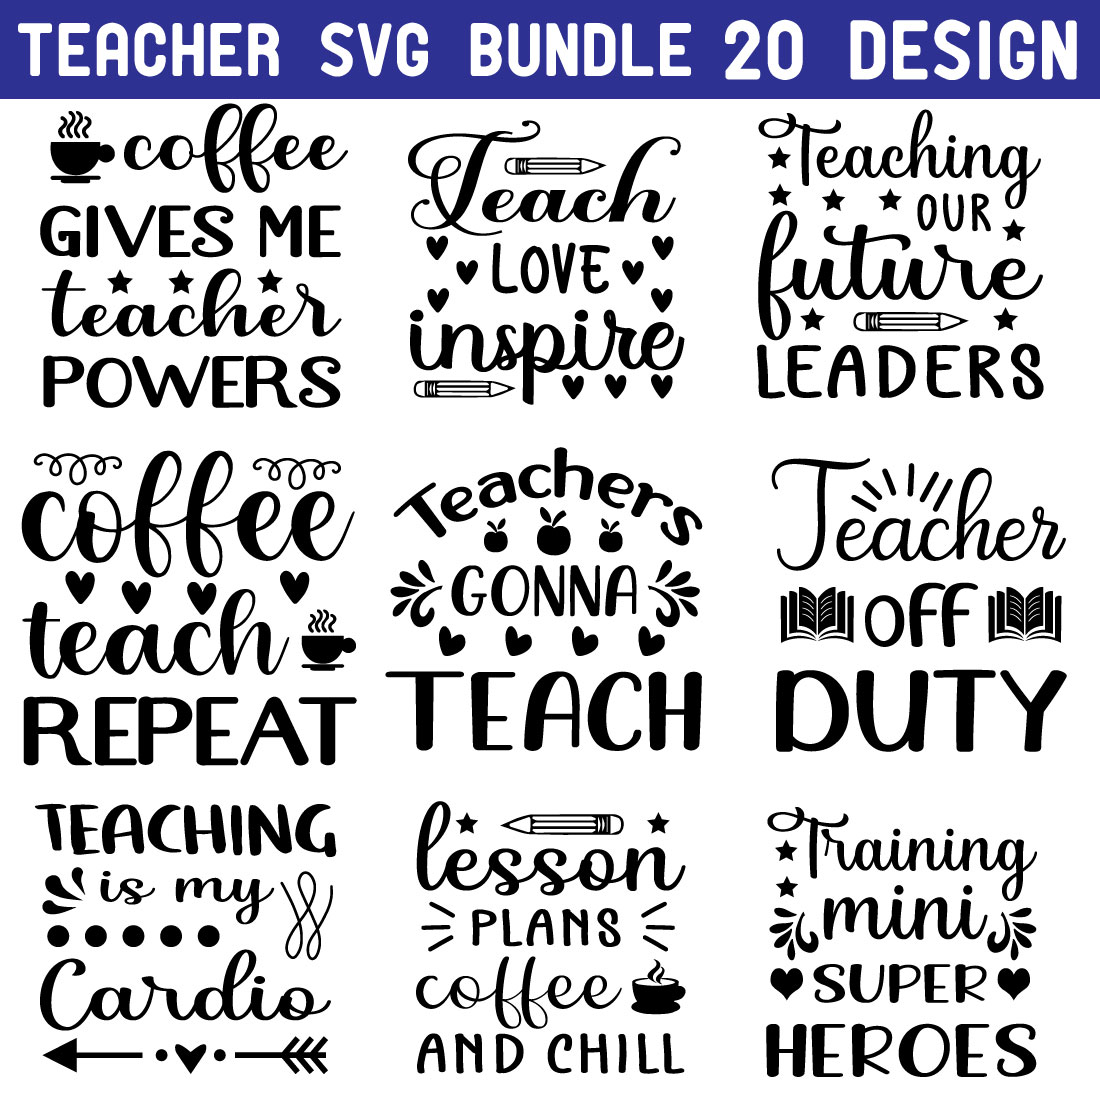 Teacher SVG Design Bundle facebook image.